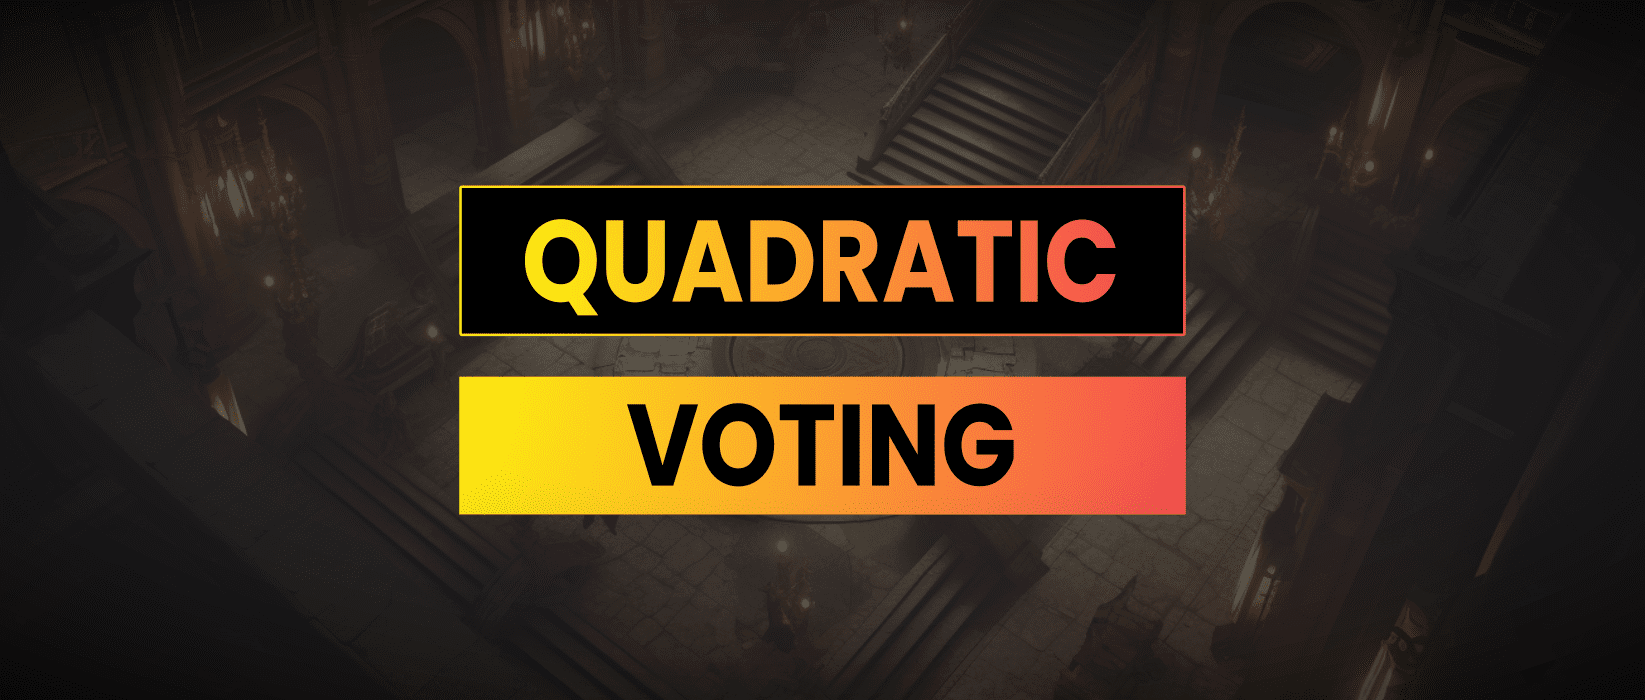 Quadratic Voting | Make Democracy Great Again